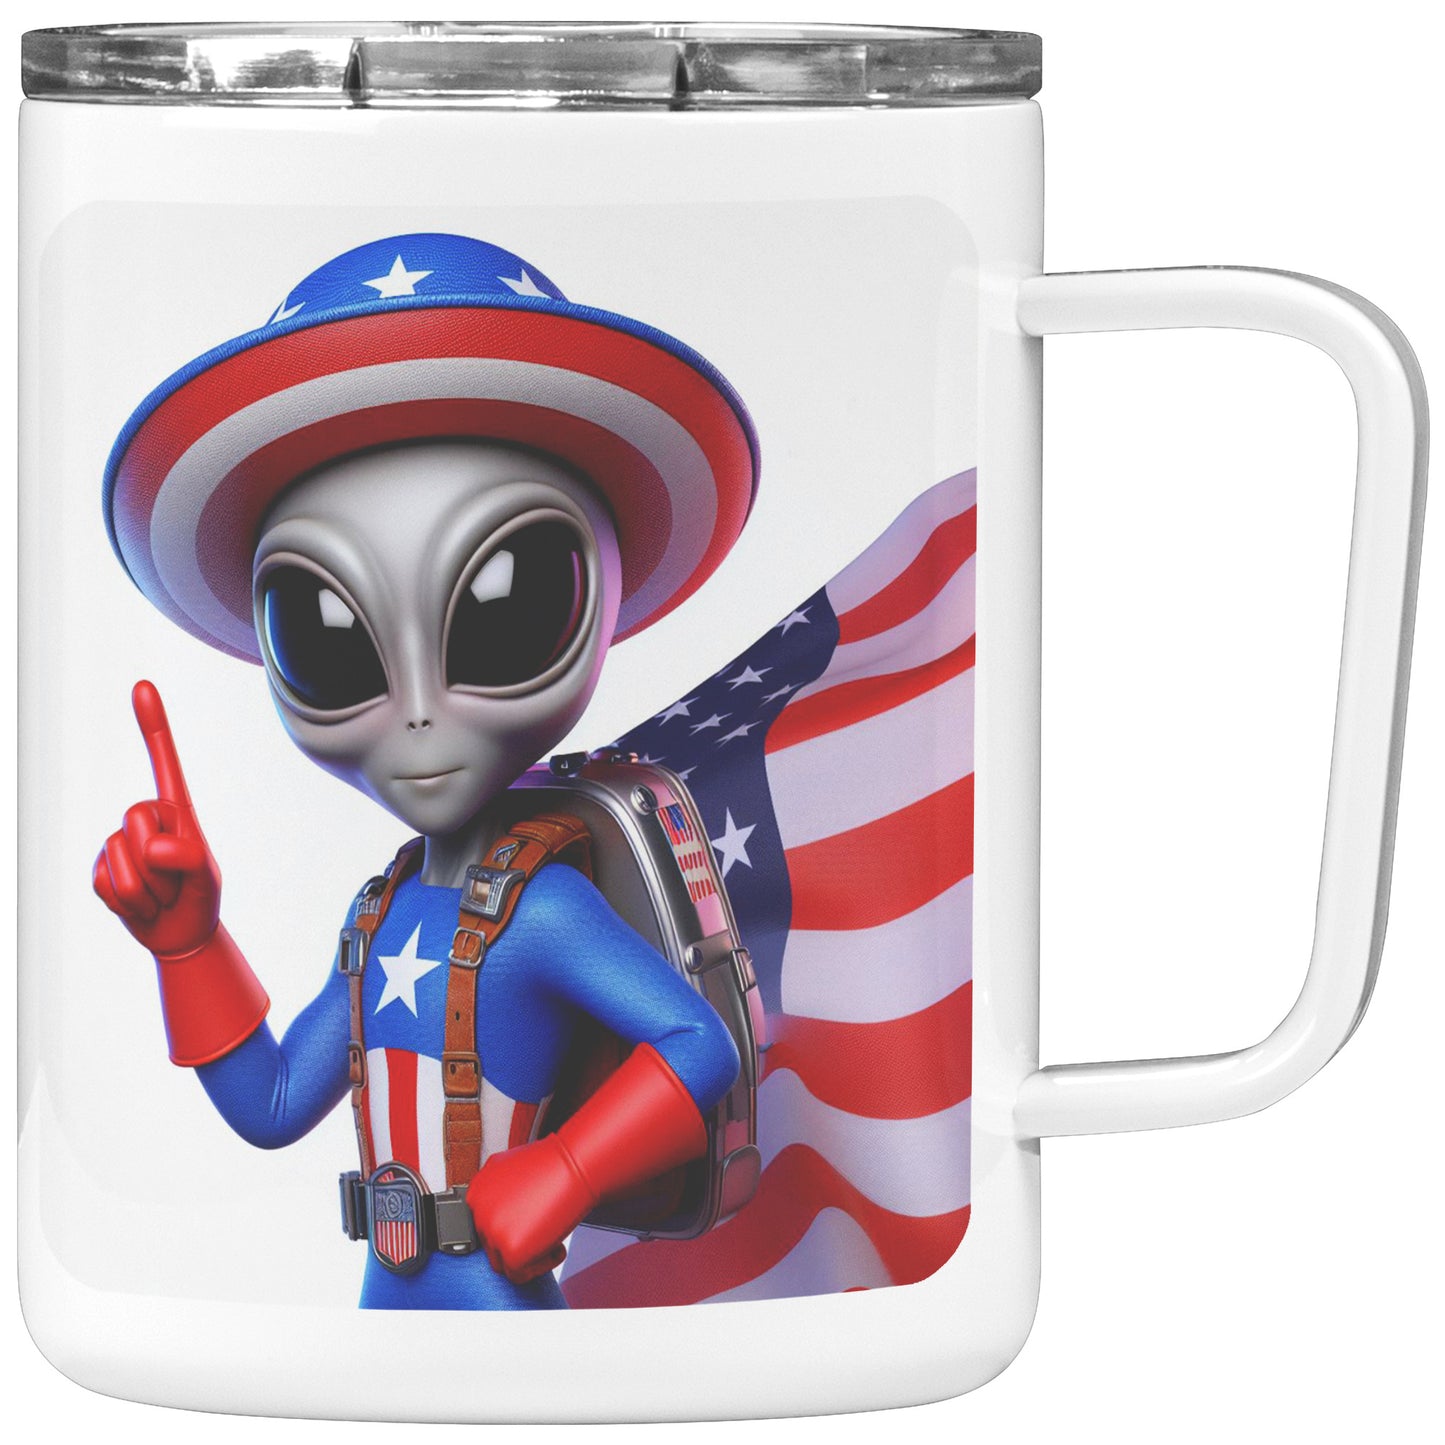 Nebulon the Grey Alien - Insulated Coffee Mug #5